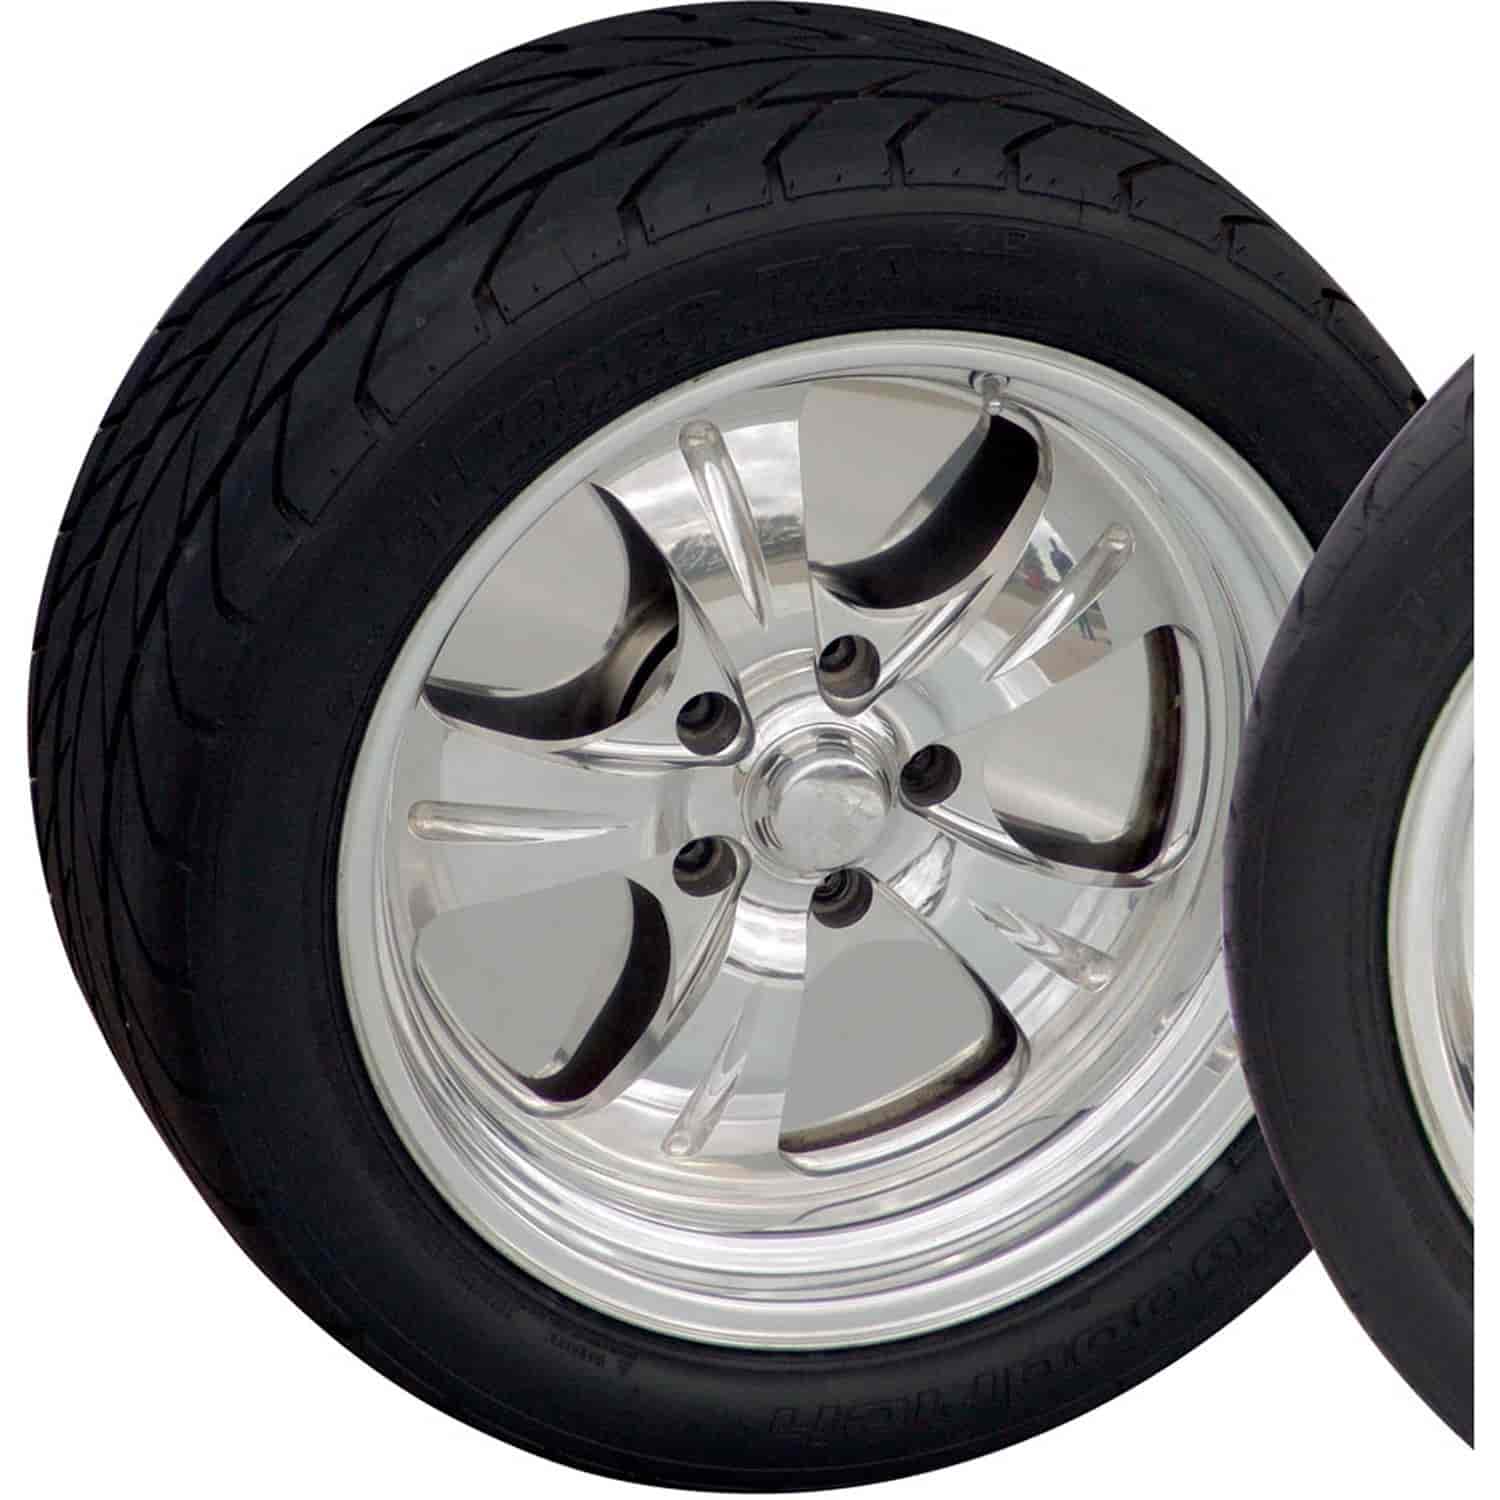 Wheelplate - Brake Dust Shield Fits 18 in. Wheel Diameter